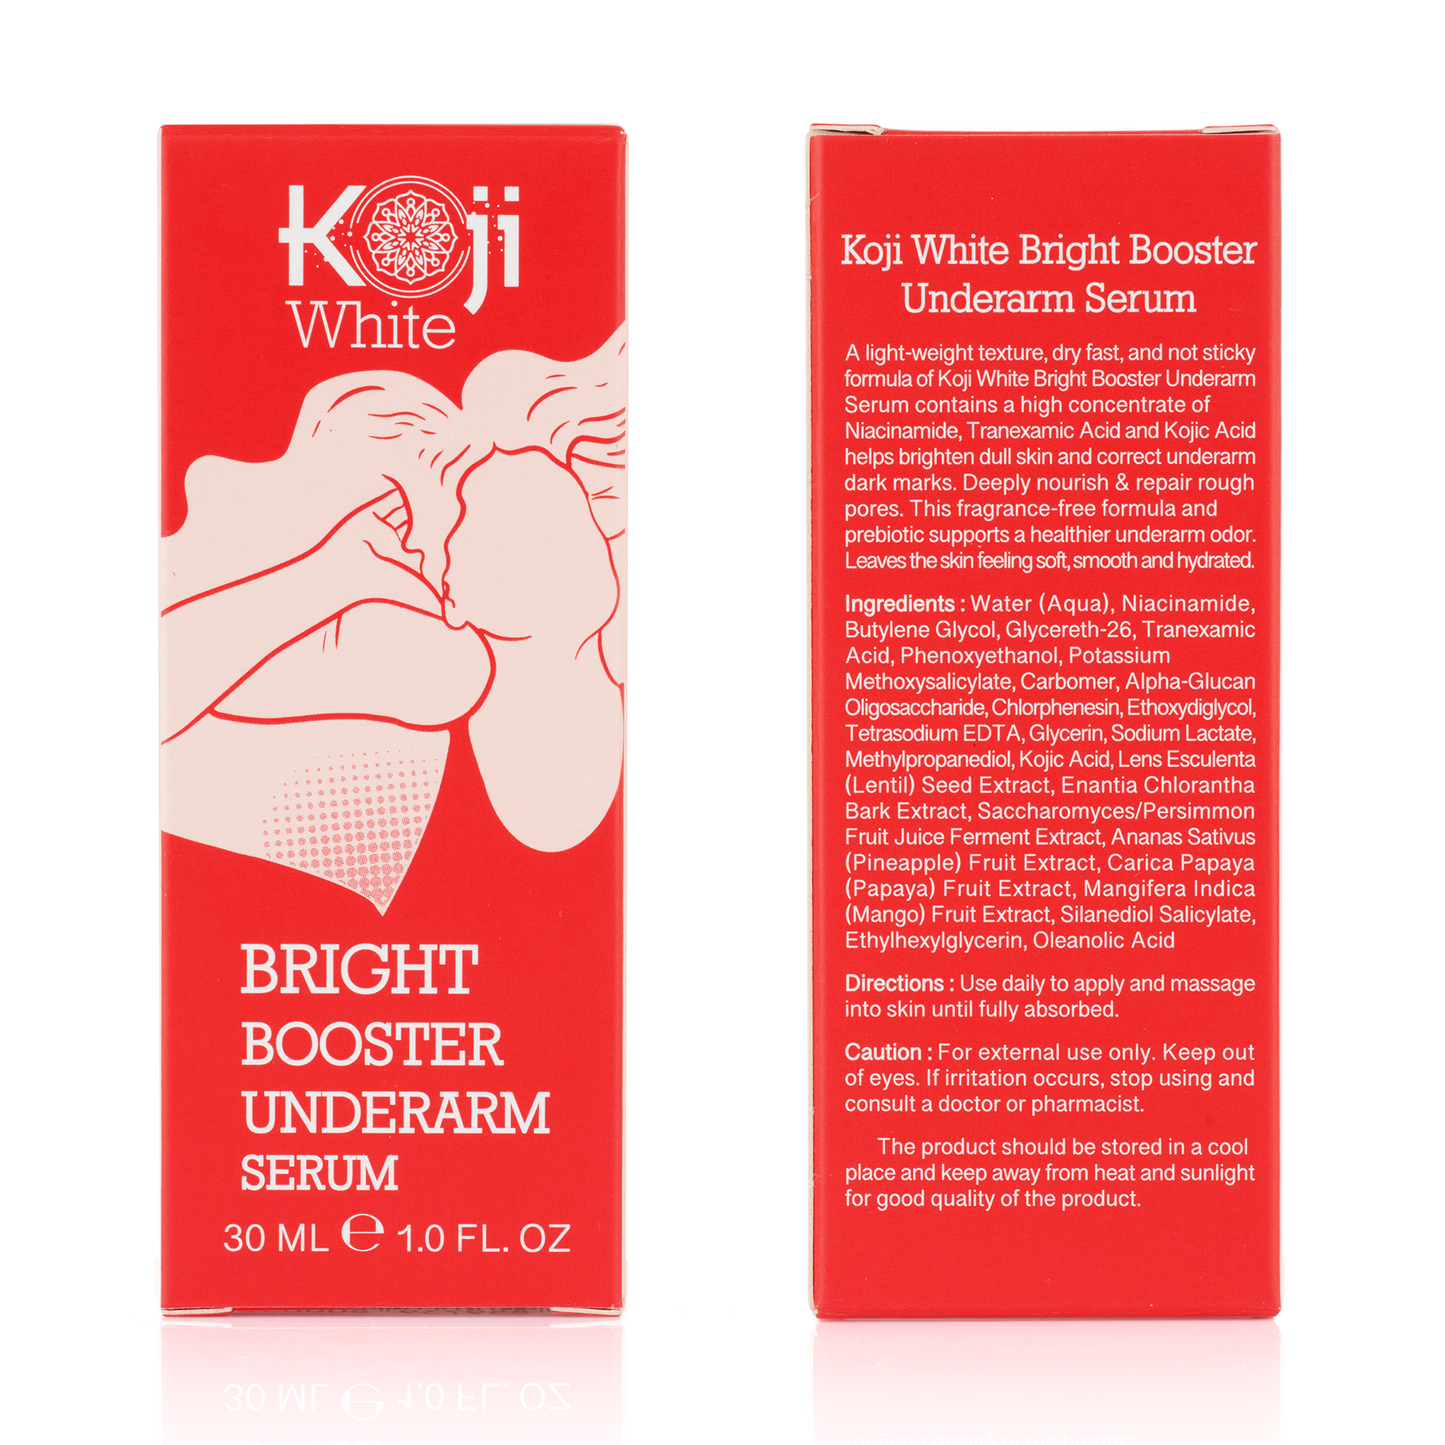 Koji White Bright Booster Underarm Serum